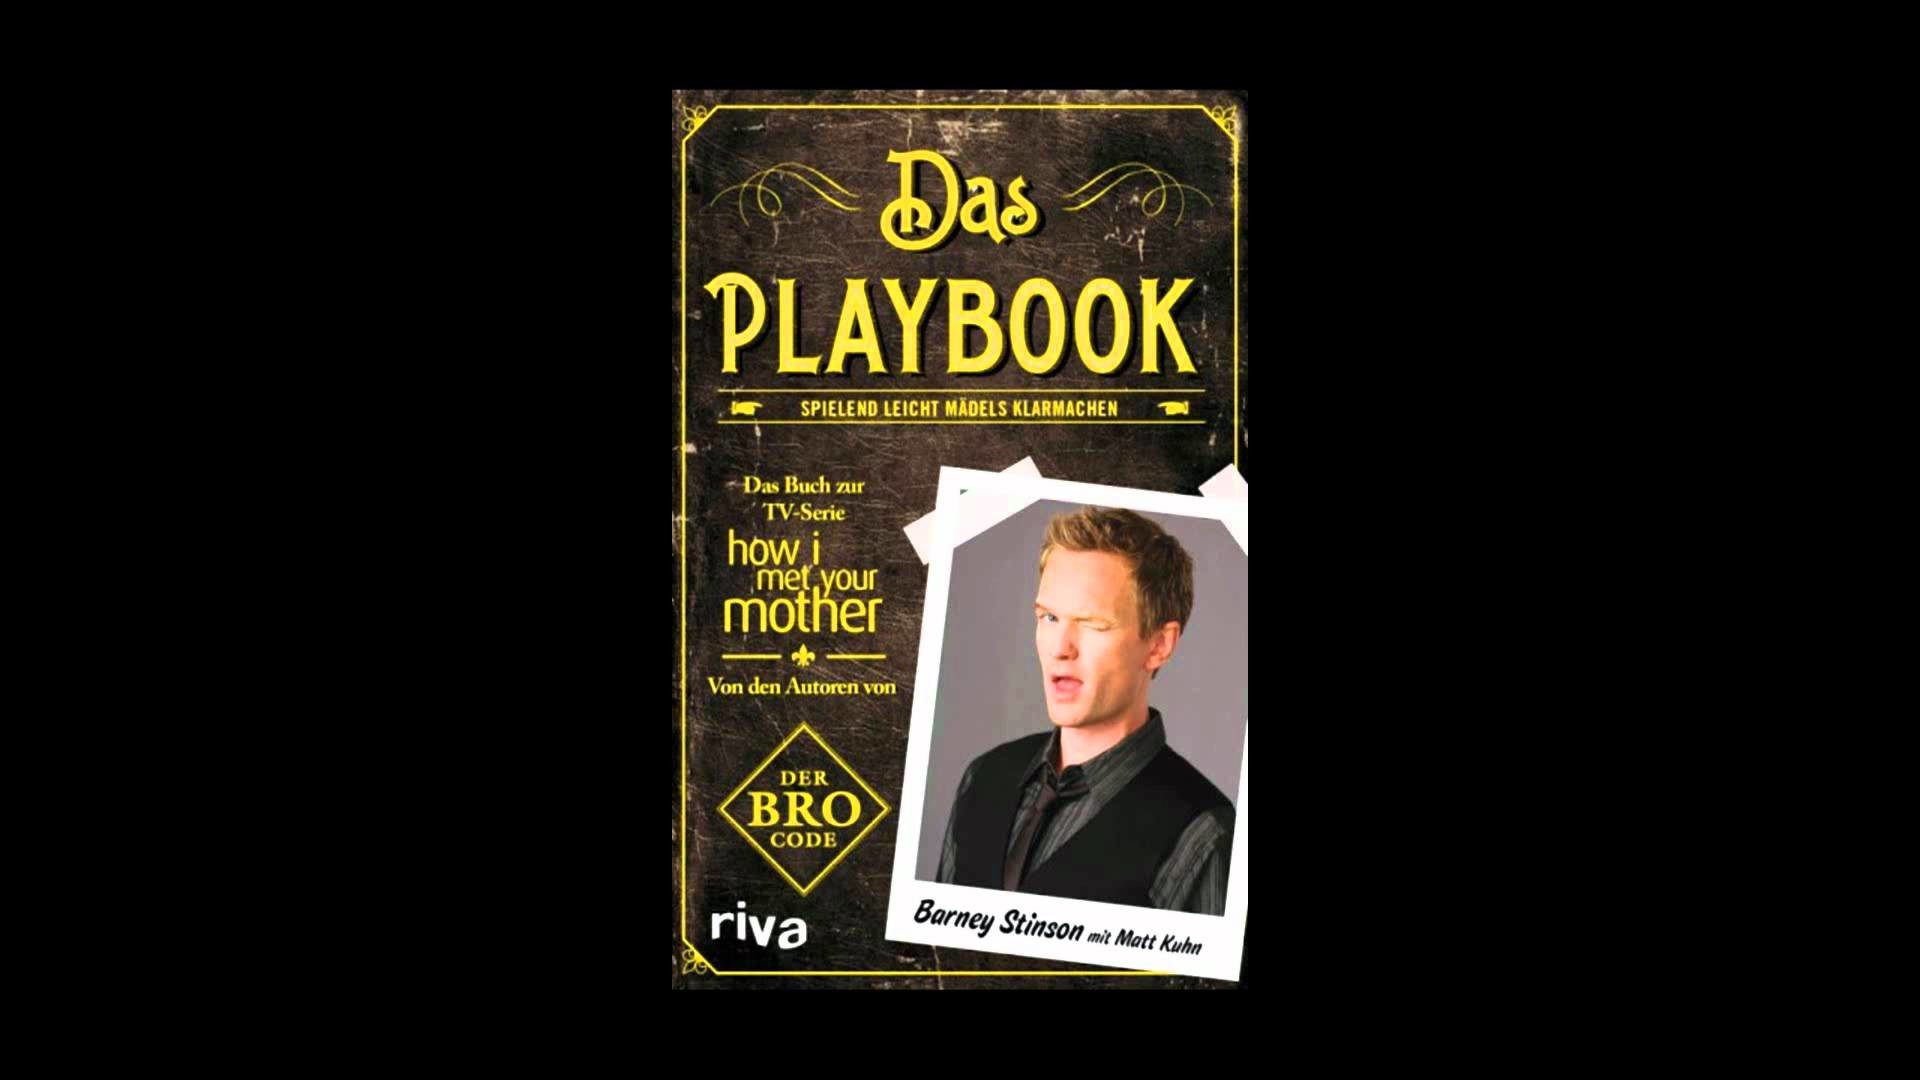 1920x1080 Barney Stinson - Das Playbook (GERMAN) - Probevorlesung (by B-Tag)